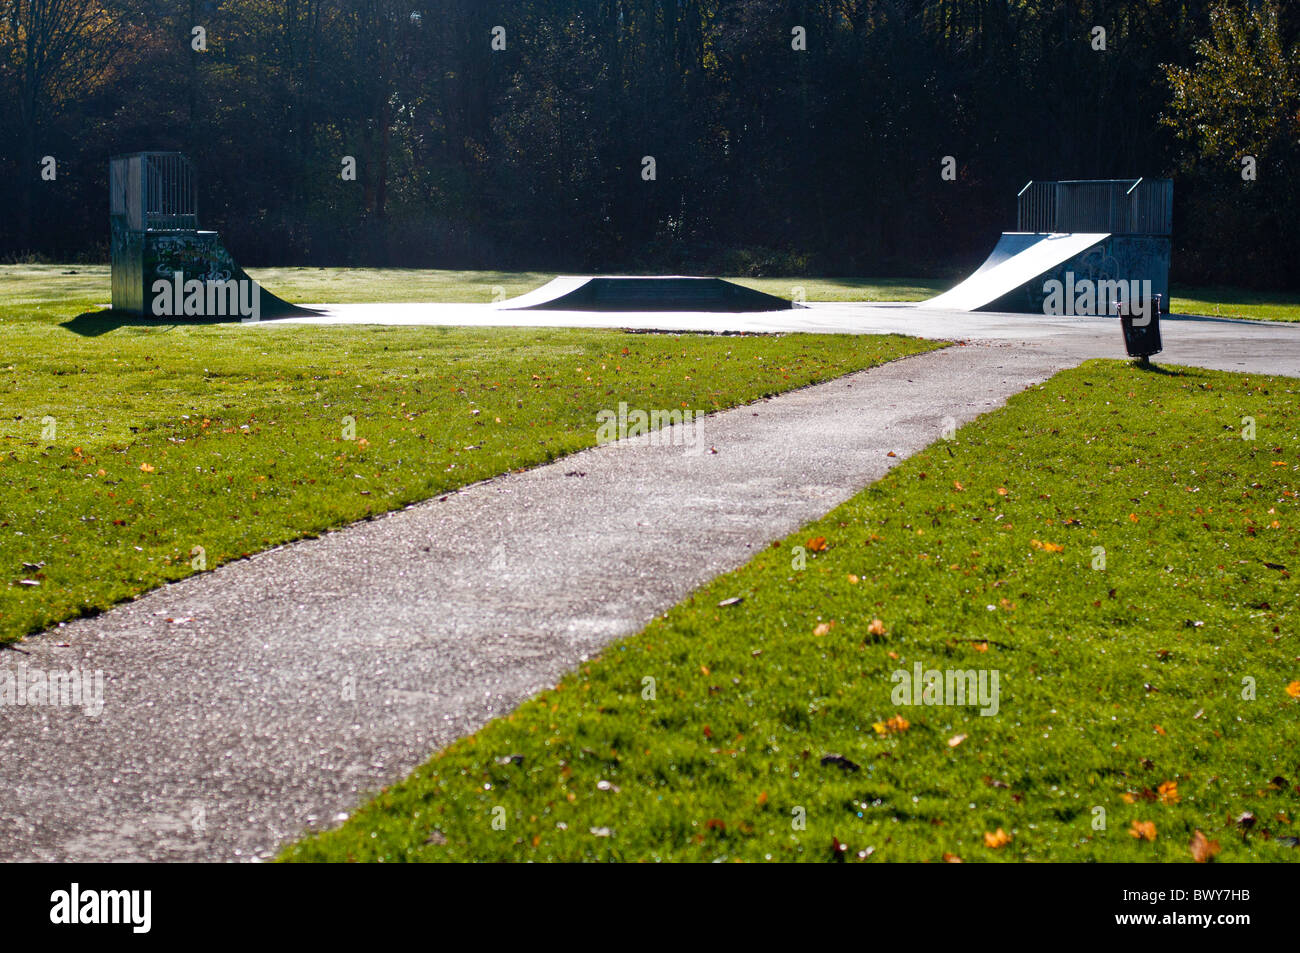 Rampe de skate en Parc, Wilmslow, UK Banque D'Images